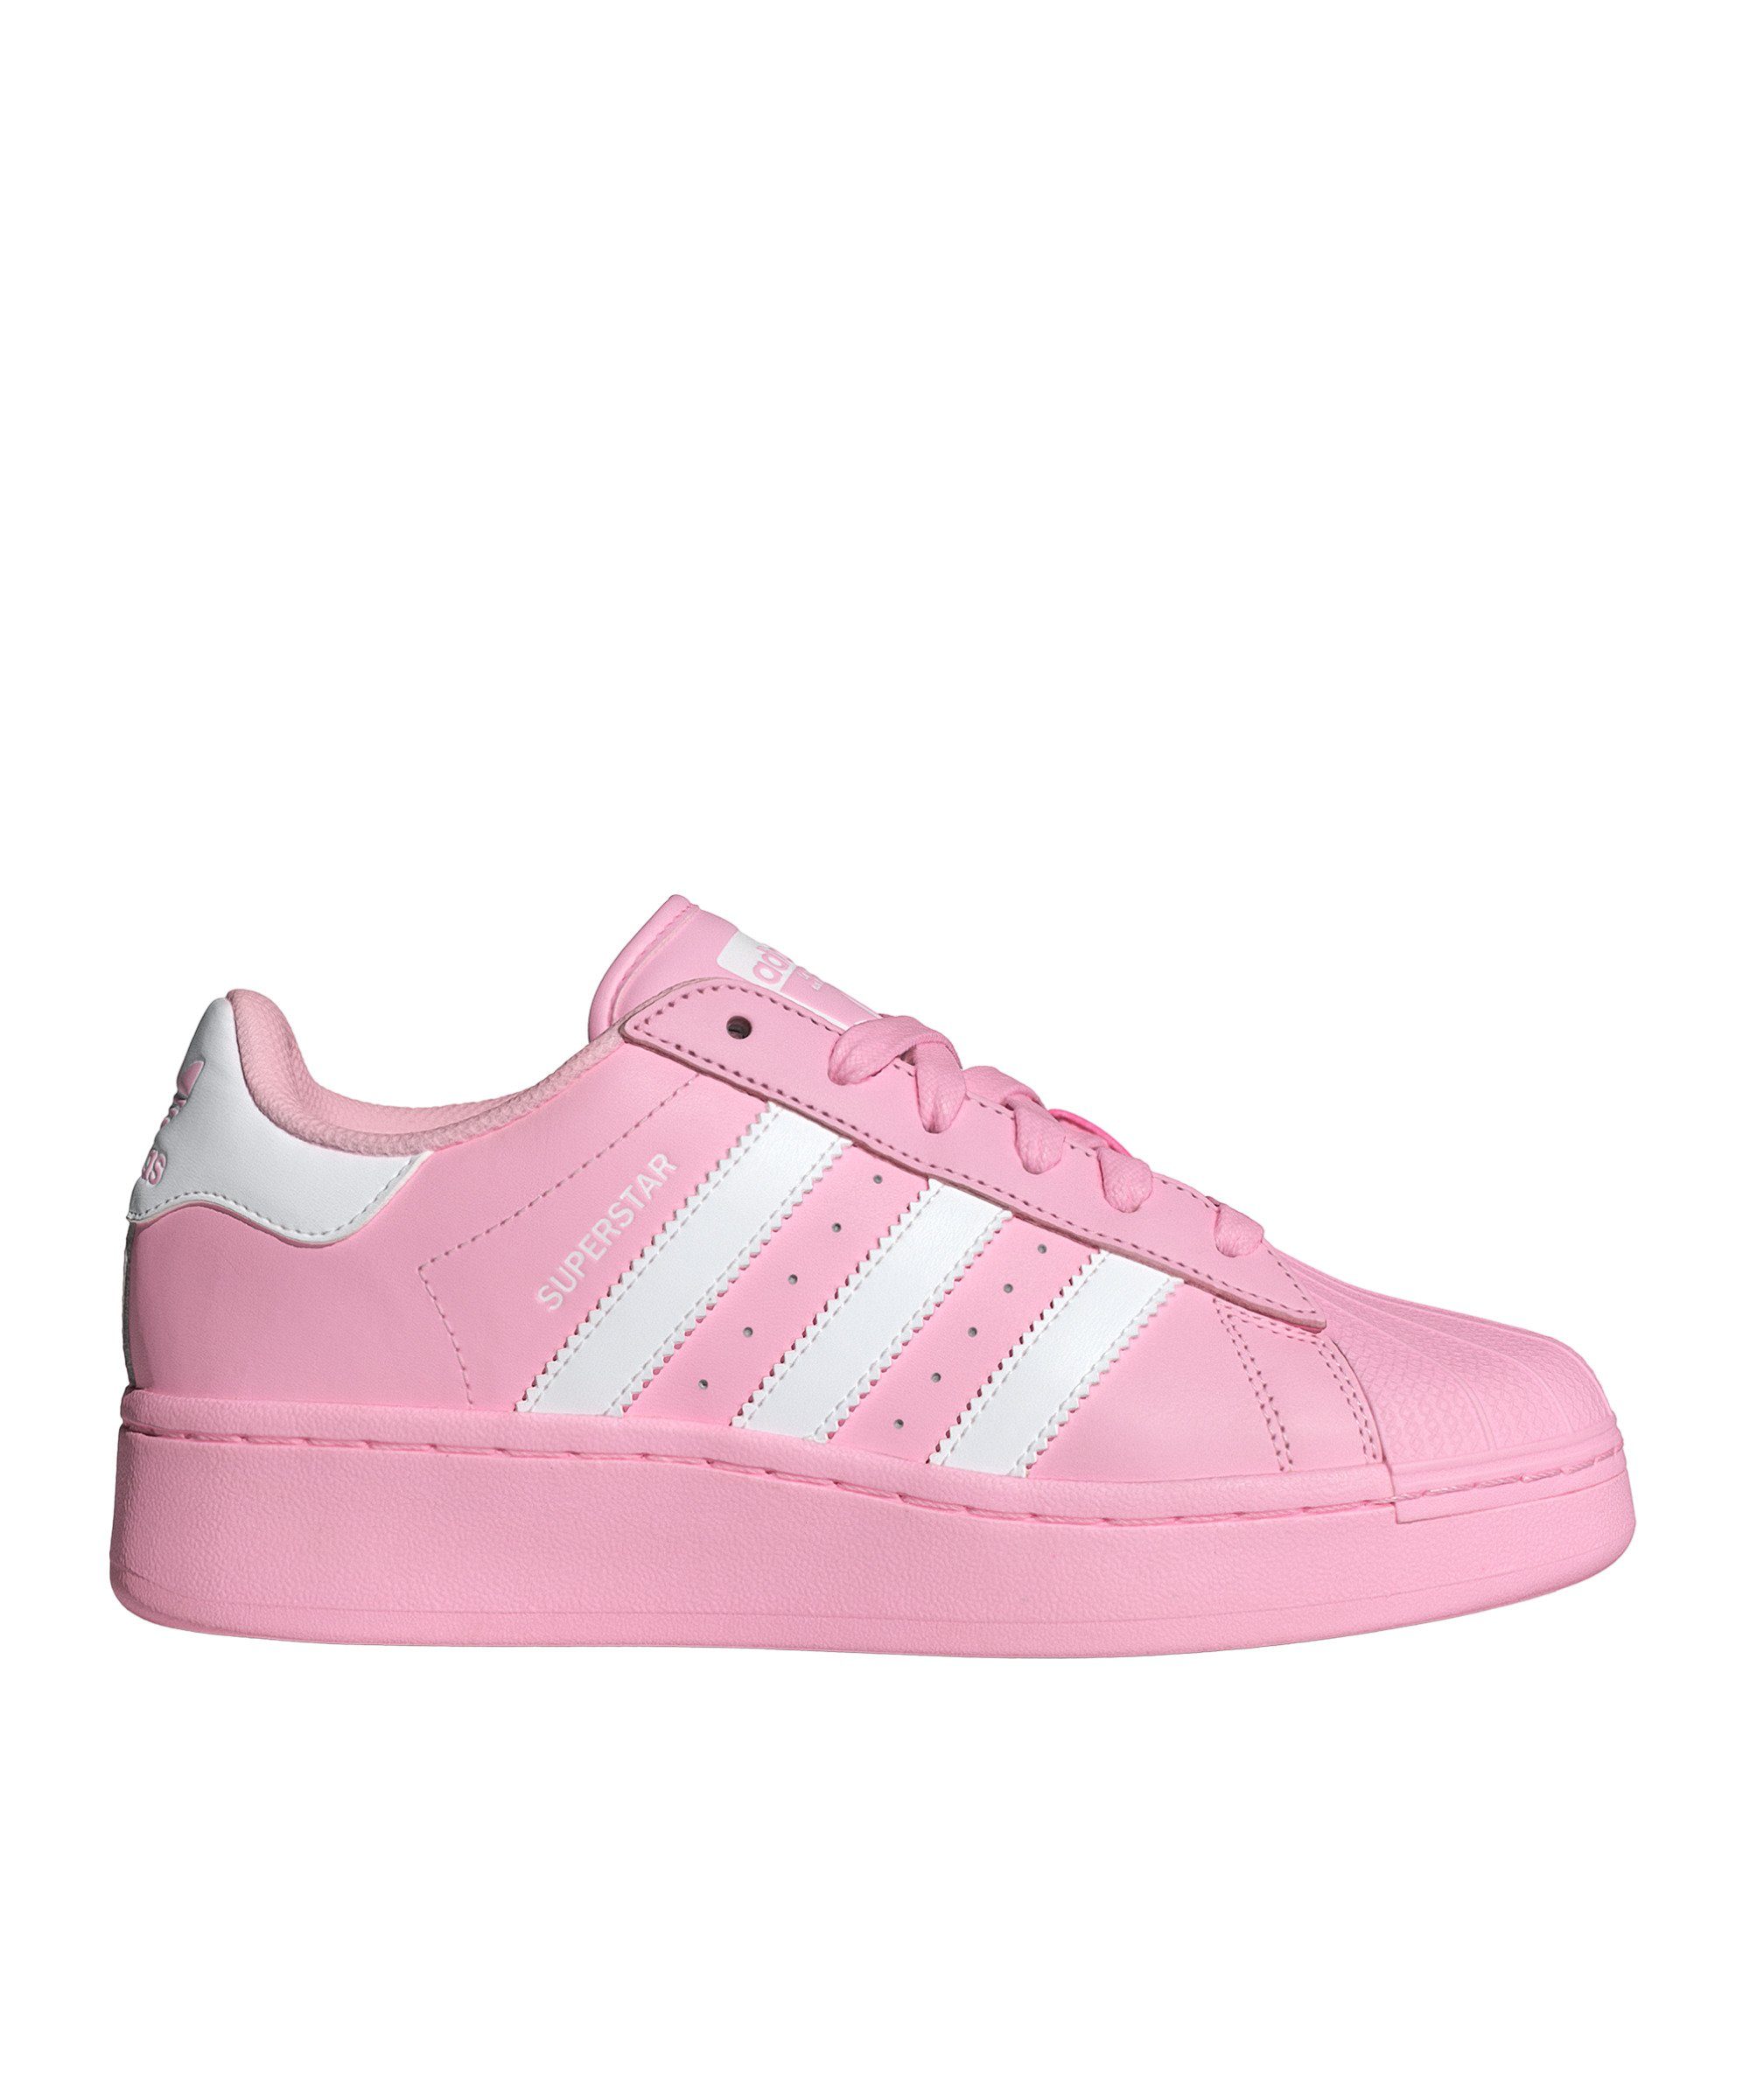 adidas Originals Superstar XLG Damen Sneaker pinkweisspink